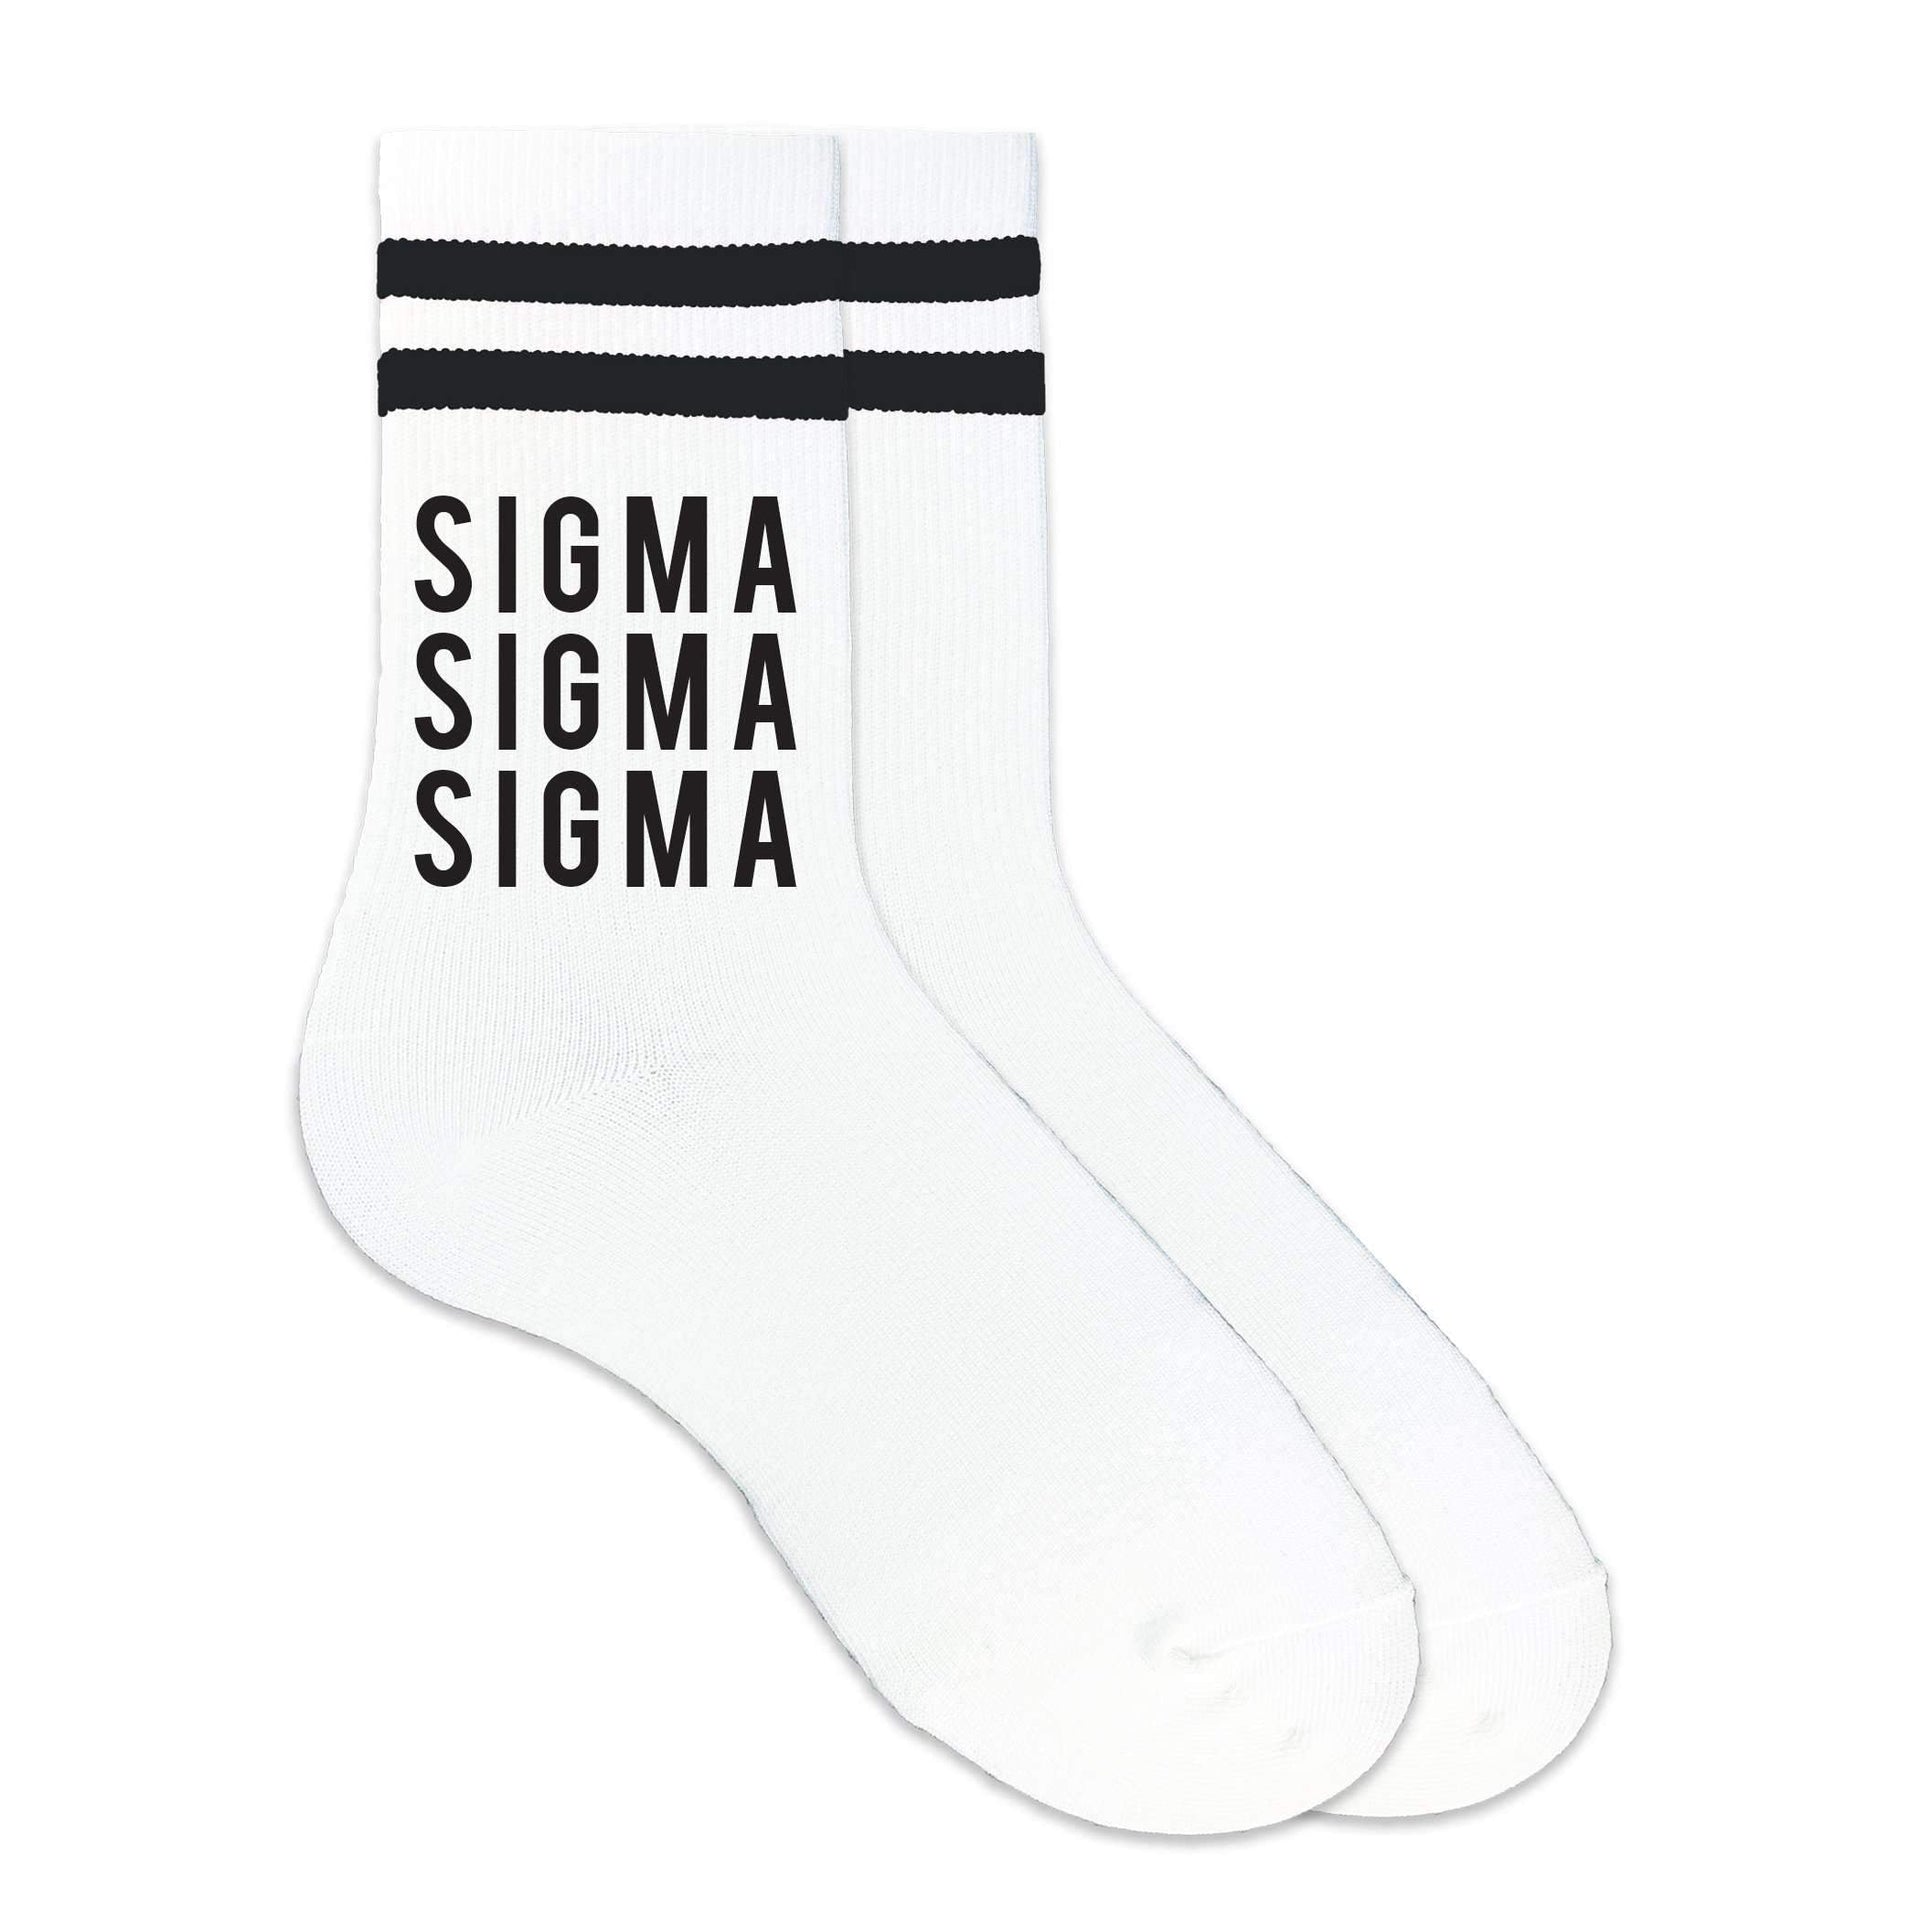 Sigma Sigma Sigma sorority name custom printed on black striped crew socks